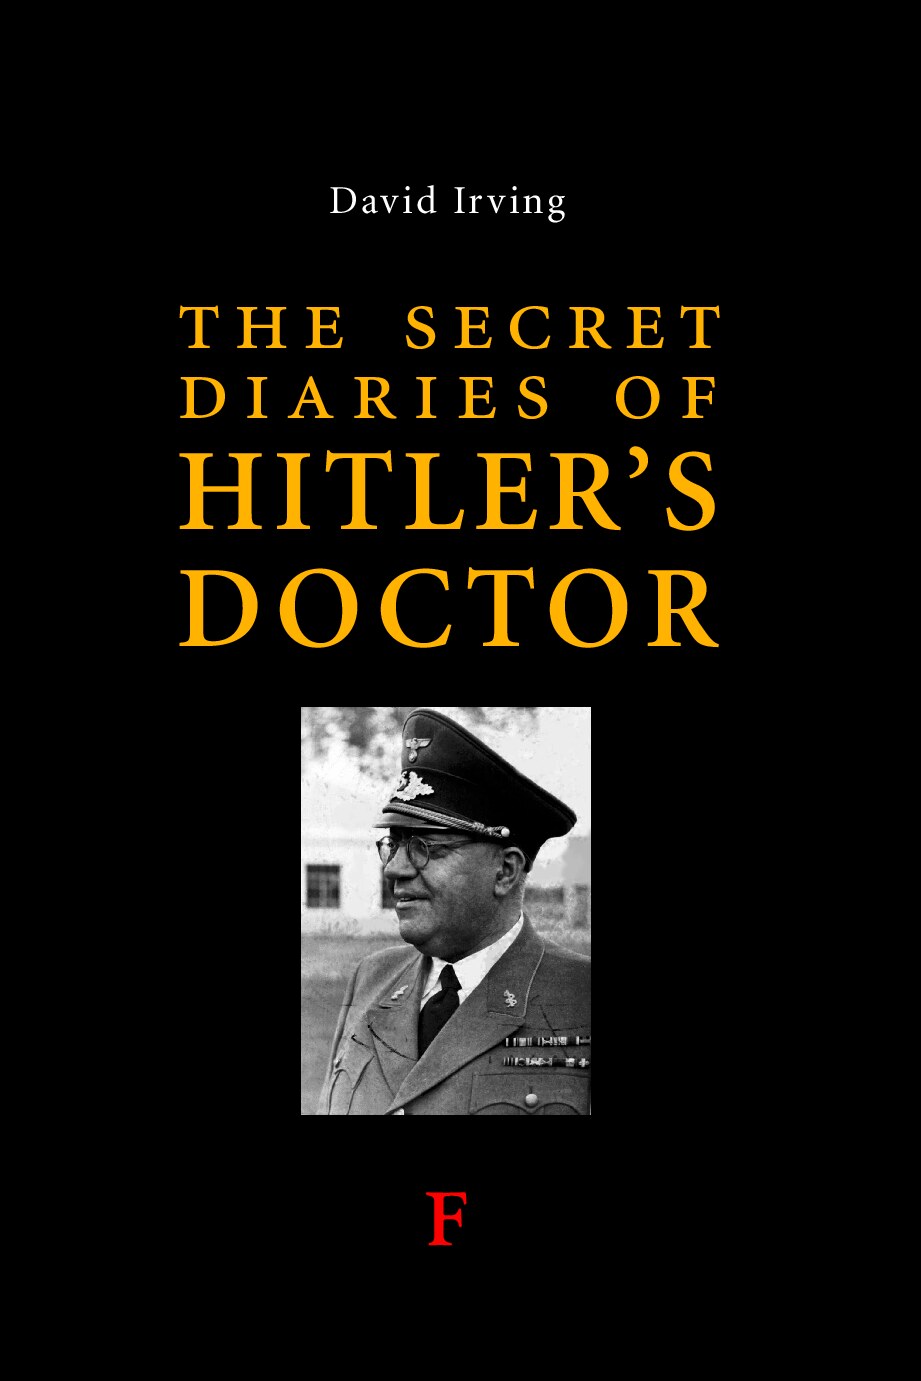 The Secret Diaries of Hitler’s Doctor